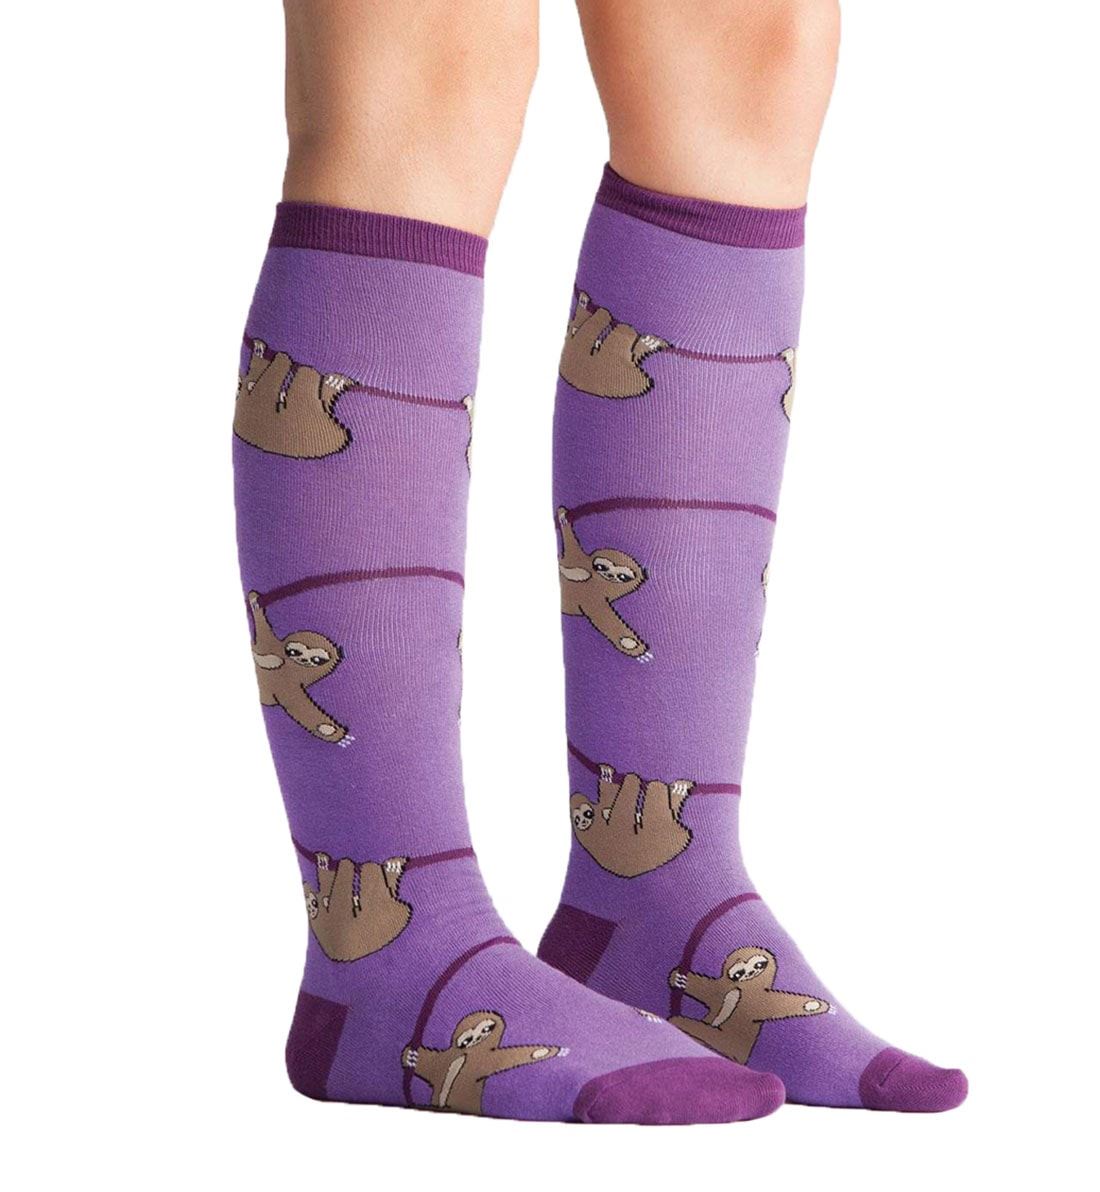 SOCK it to me Unisex Knee High Socks (f0171),Sloth - Sloth,One Size